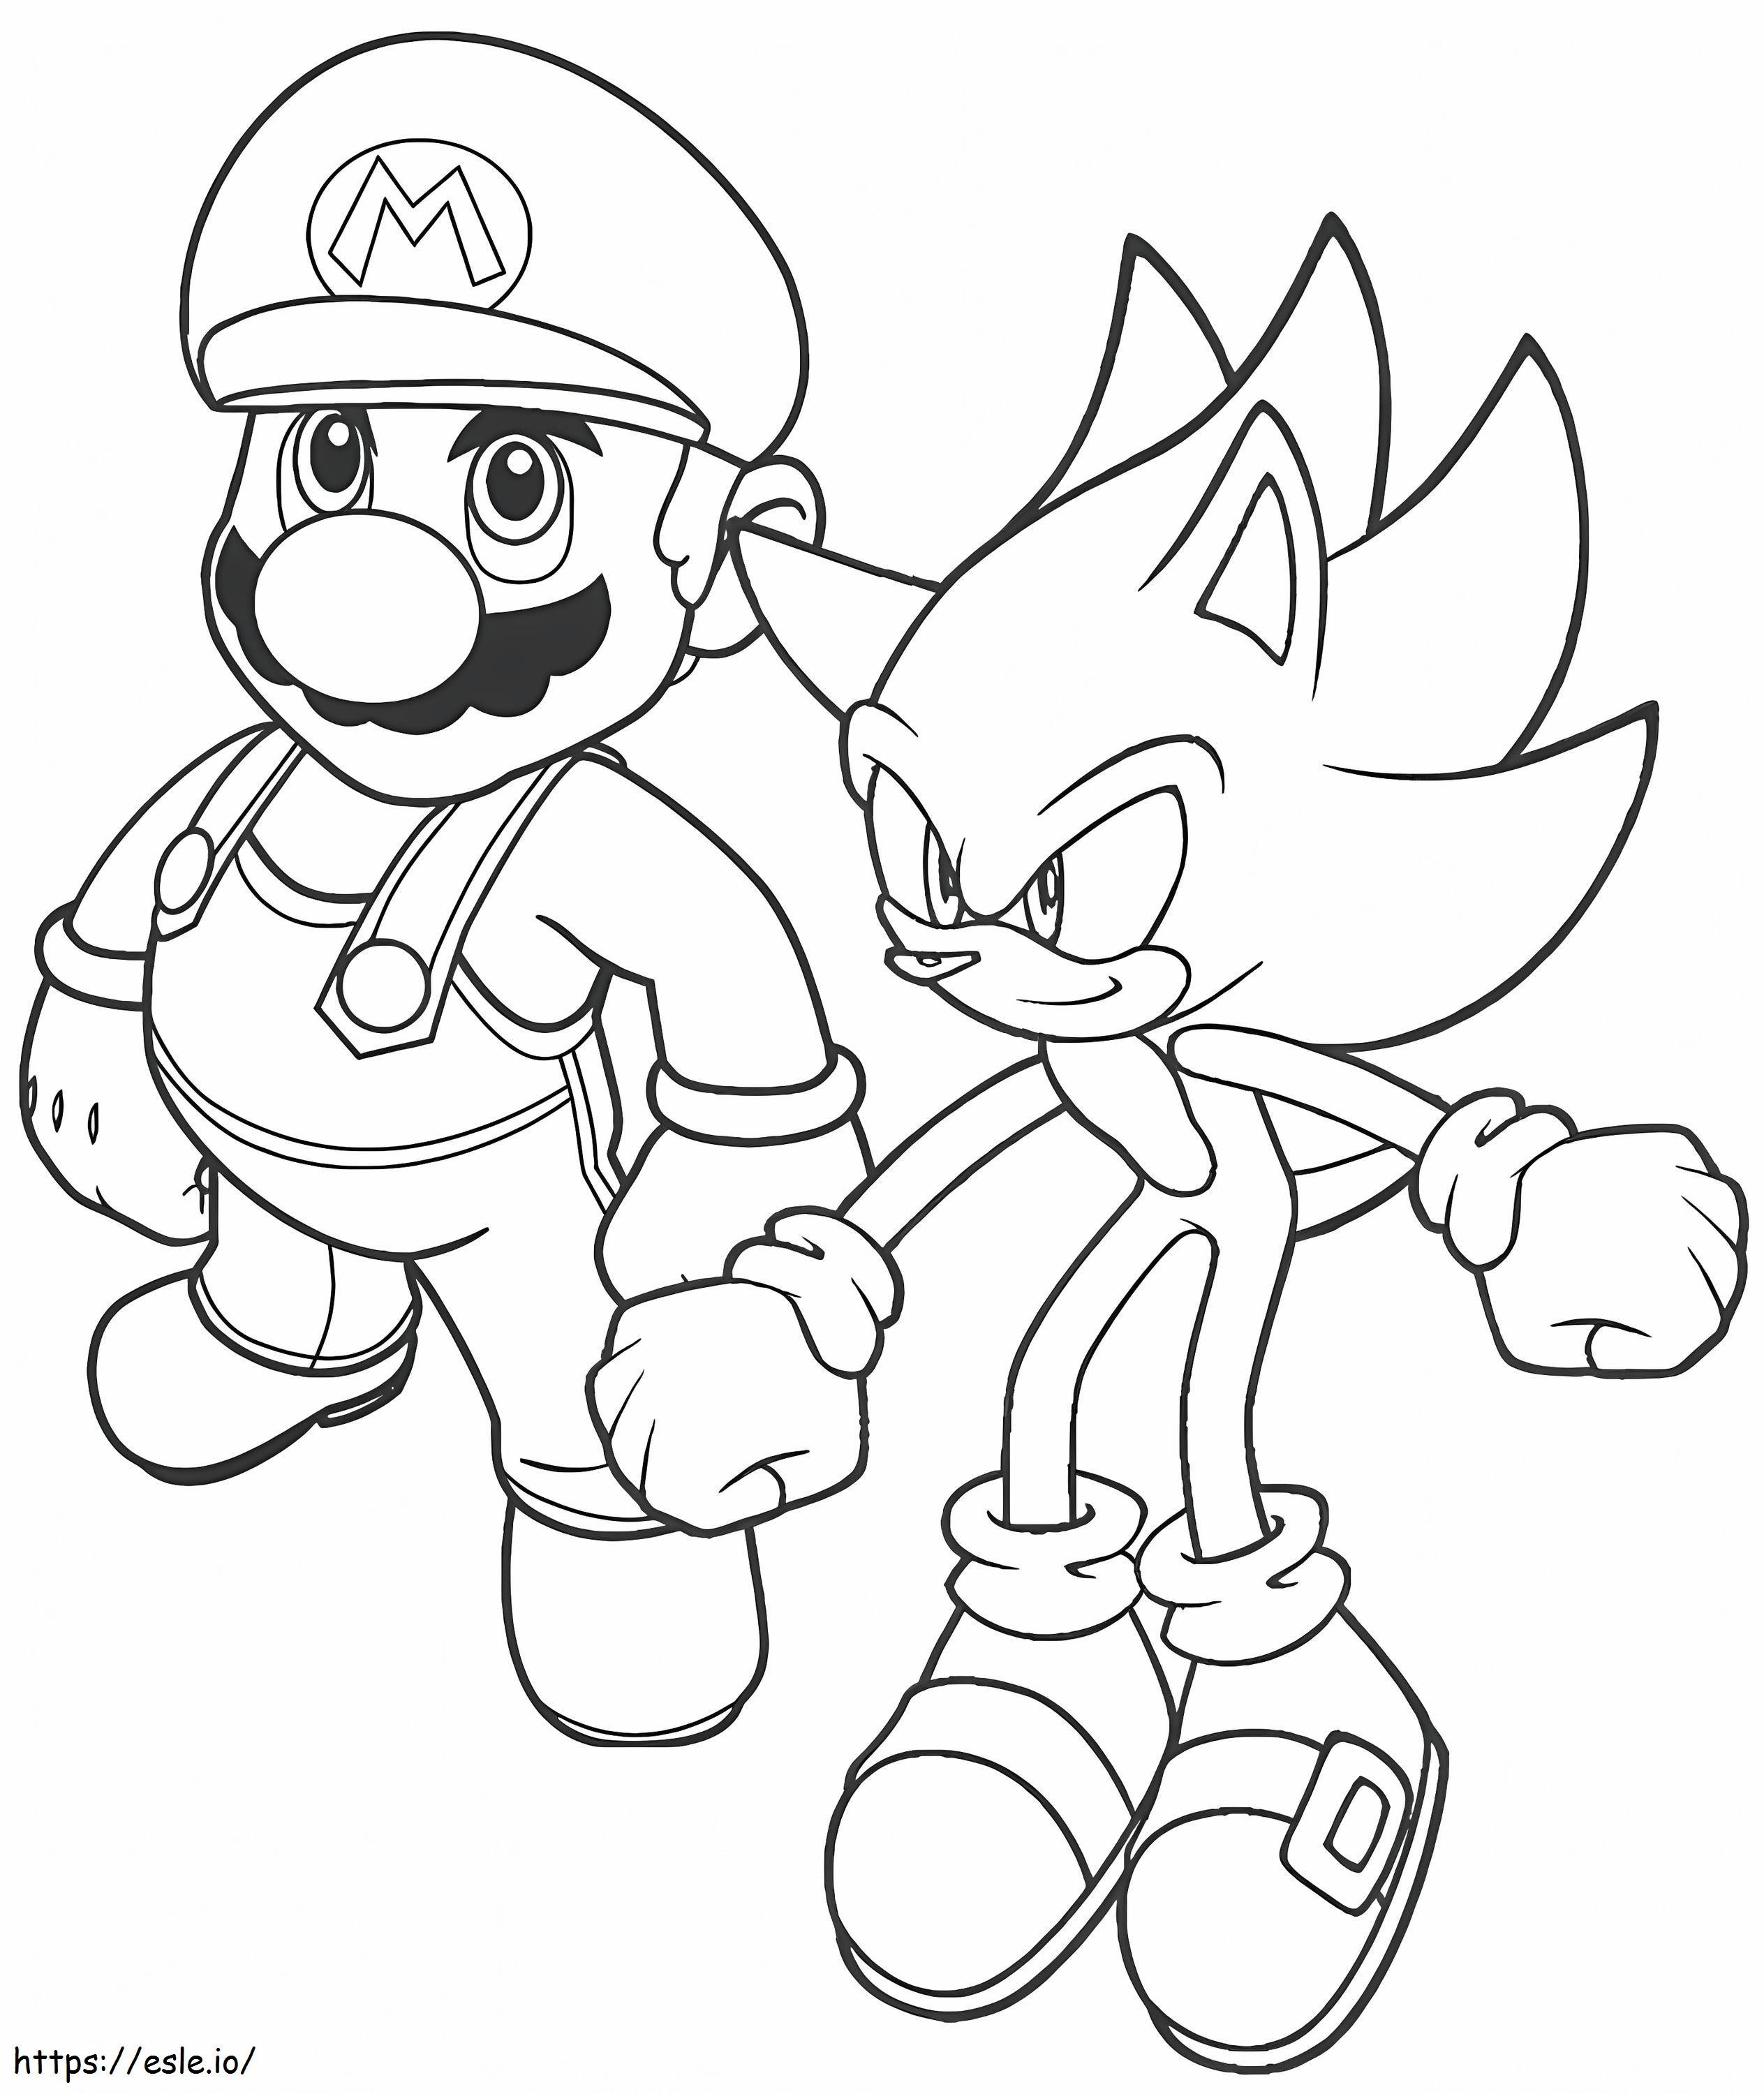  Mario und Sonic ausmalbilder